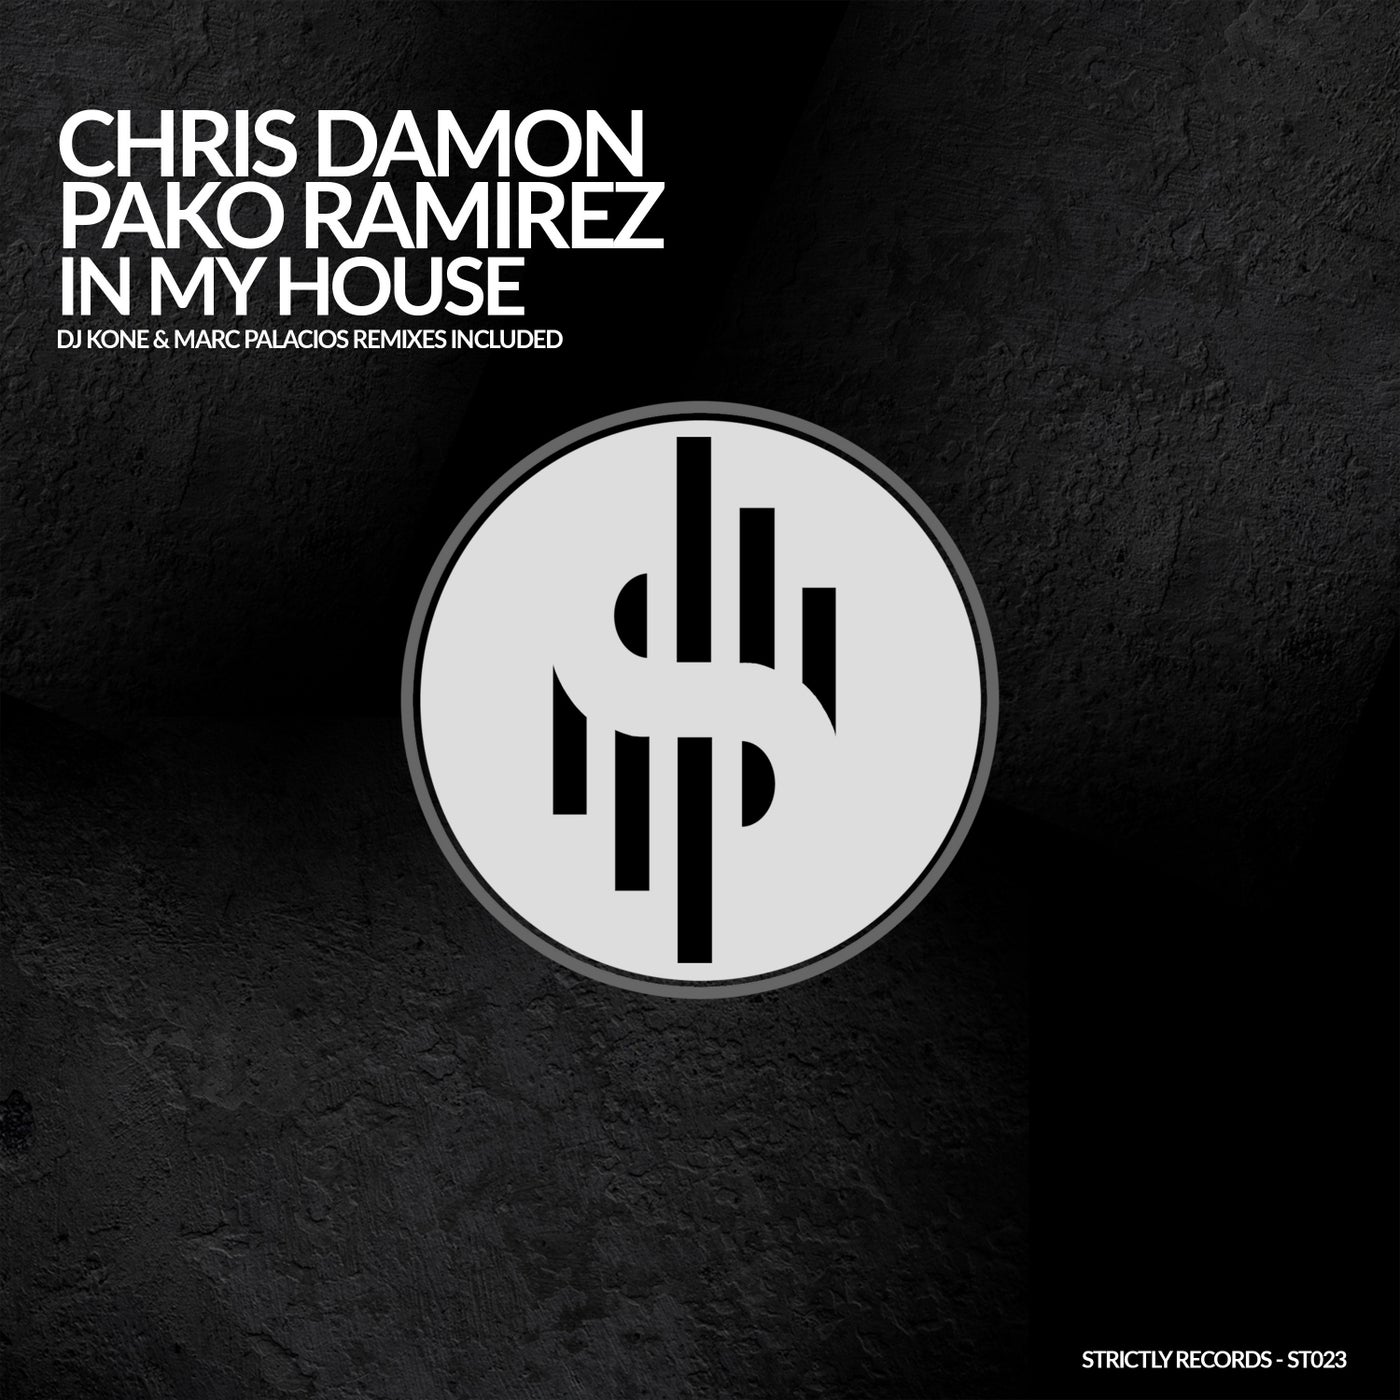 image cover: Chris Damon, Pako Ramirez - IN MY HOUSE / CAT507364